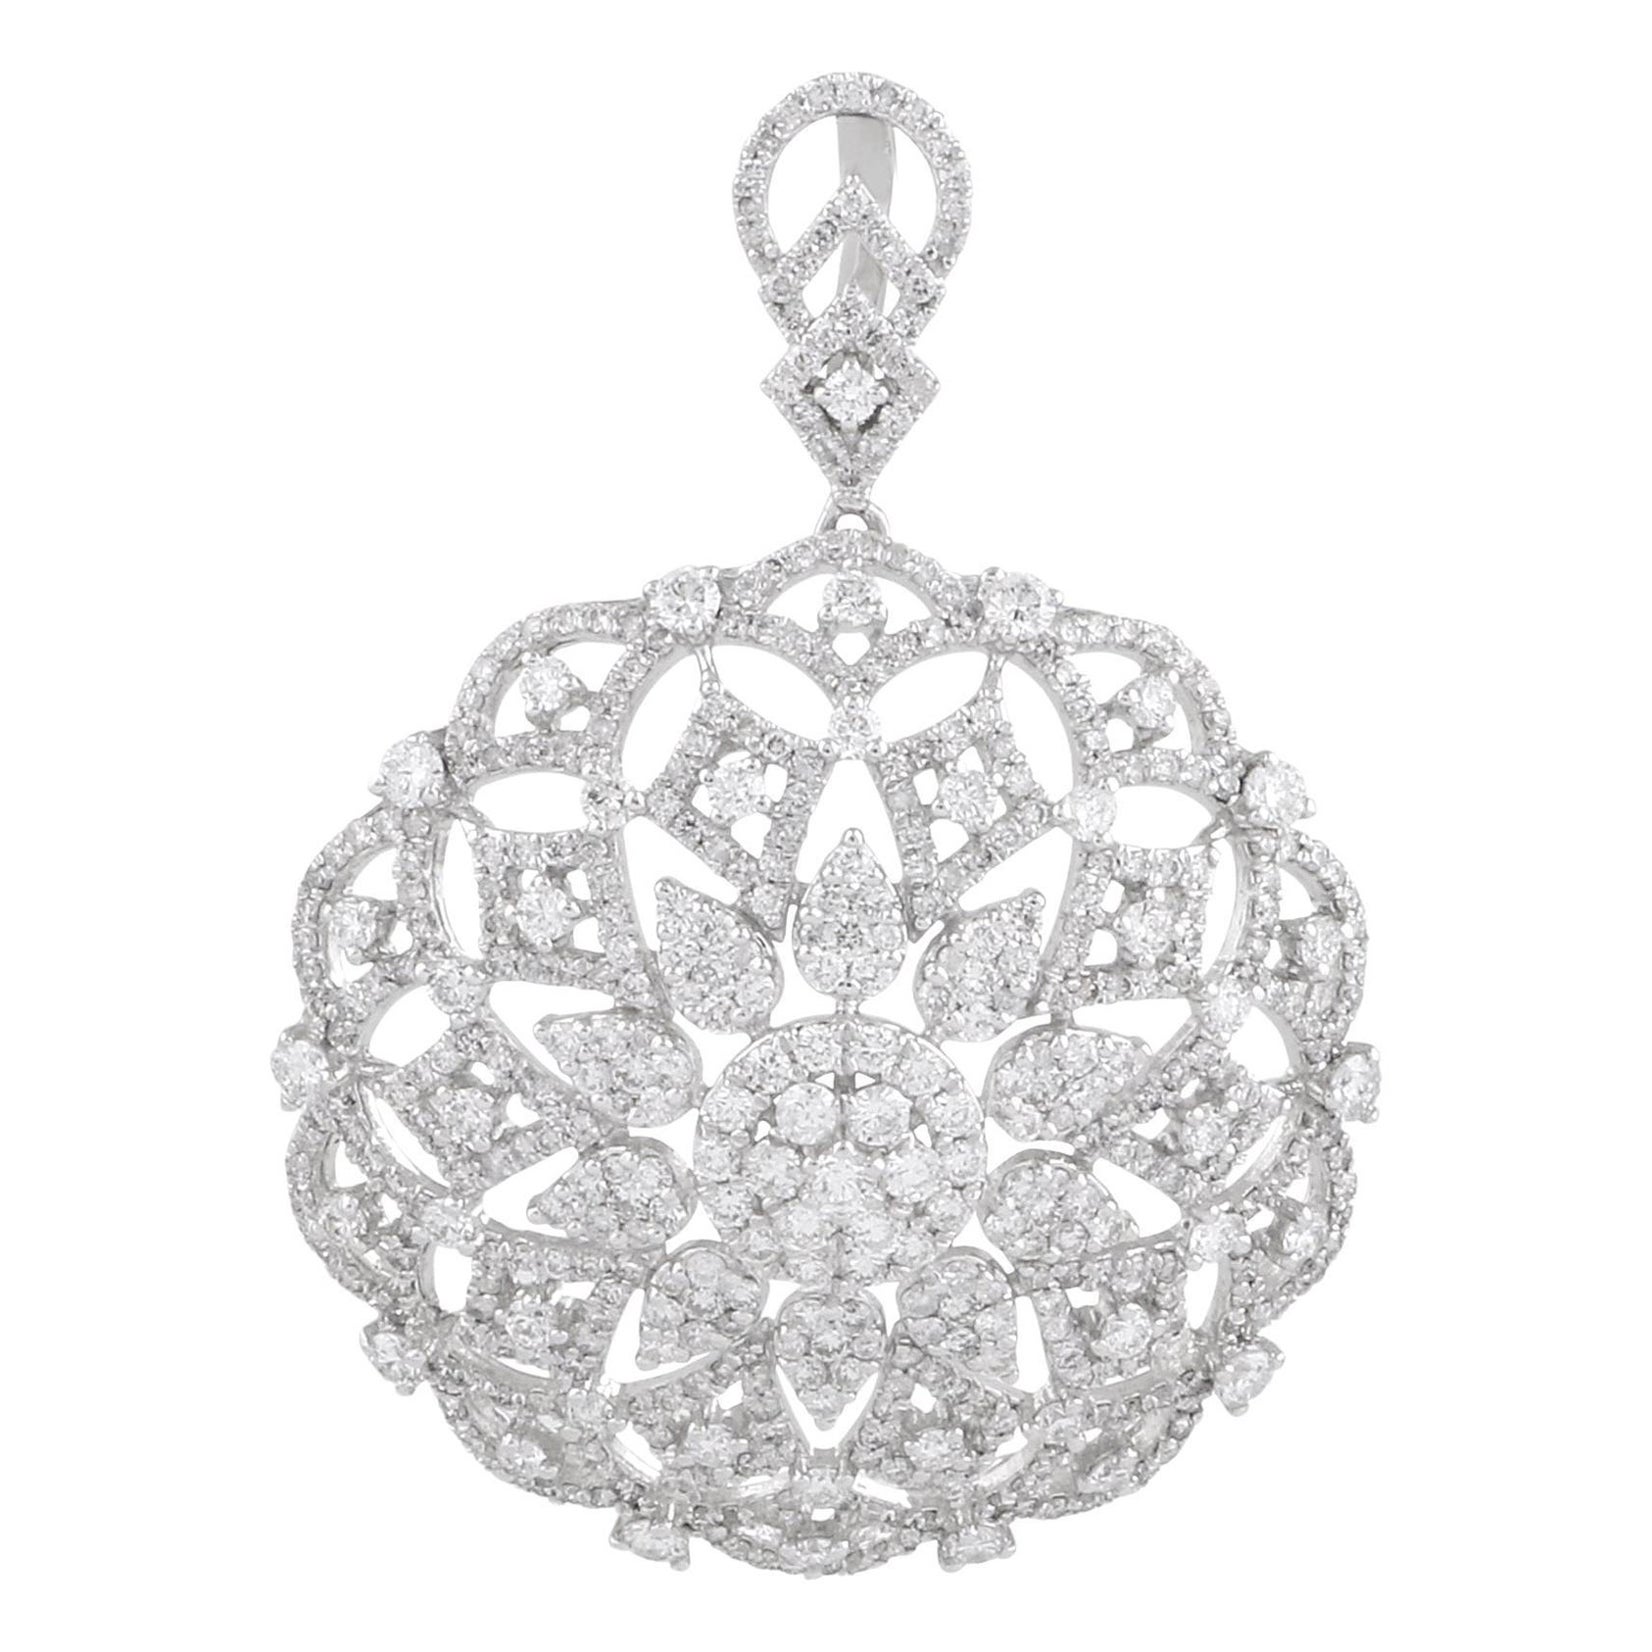 3.65 Carat Diamond Flower Design Pendant 10 Karat White Gold Handmade Jewelry